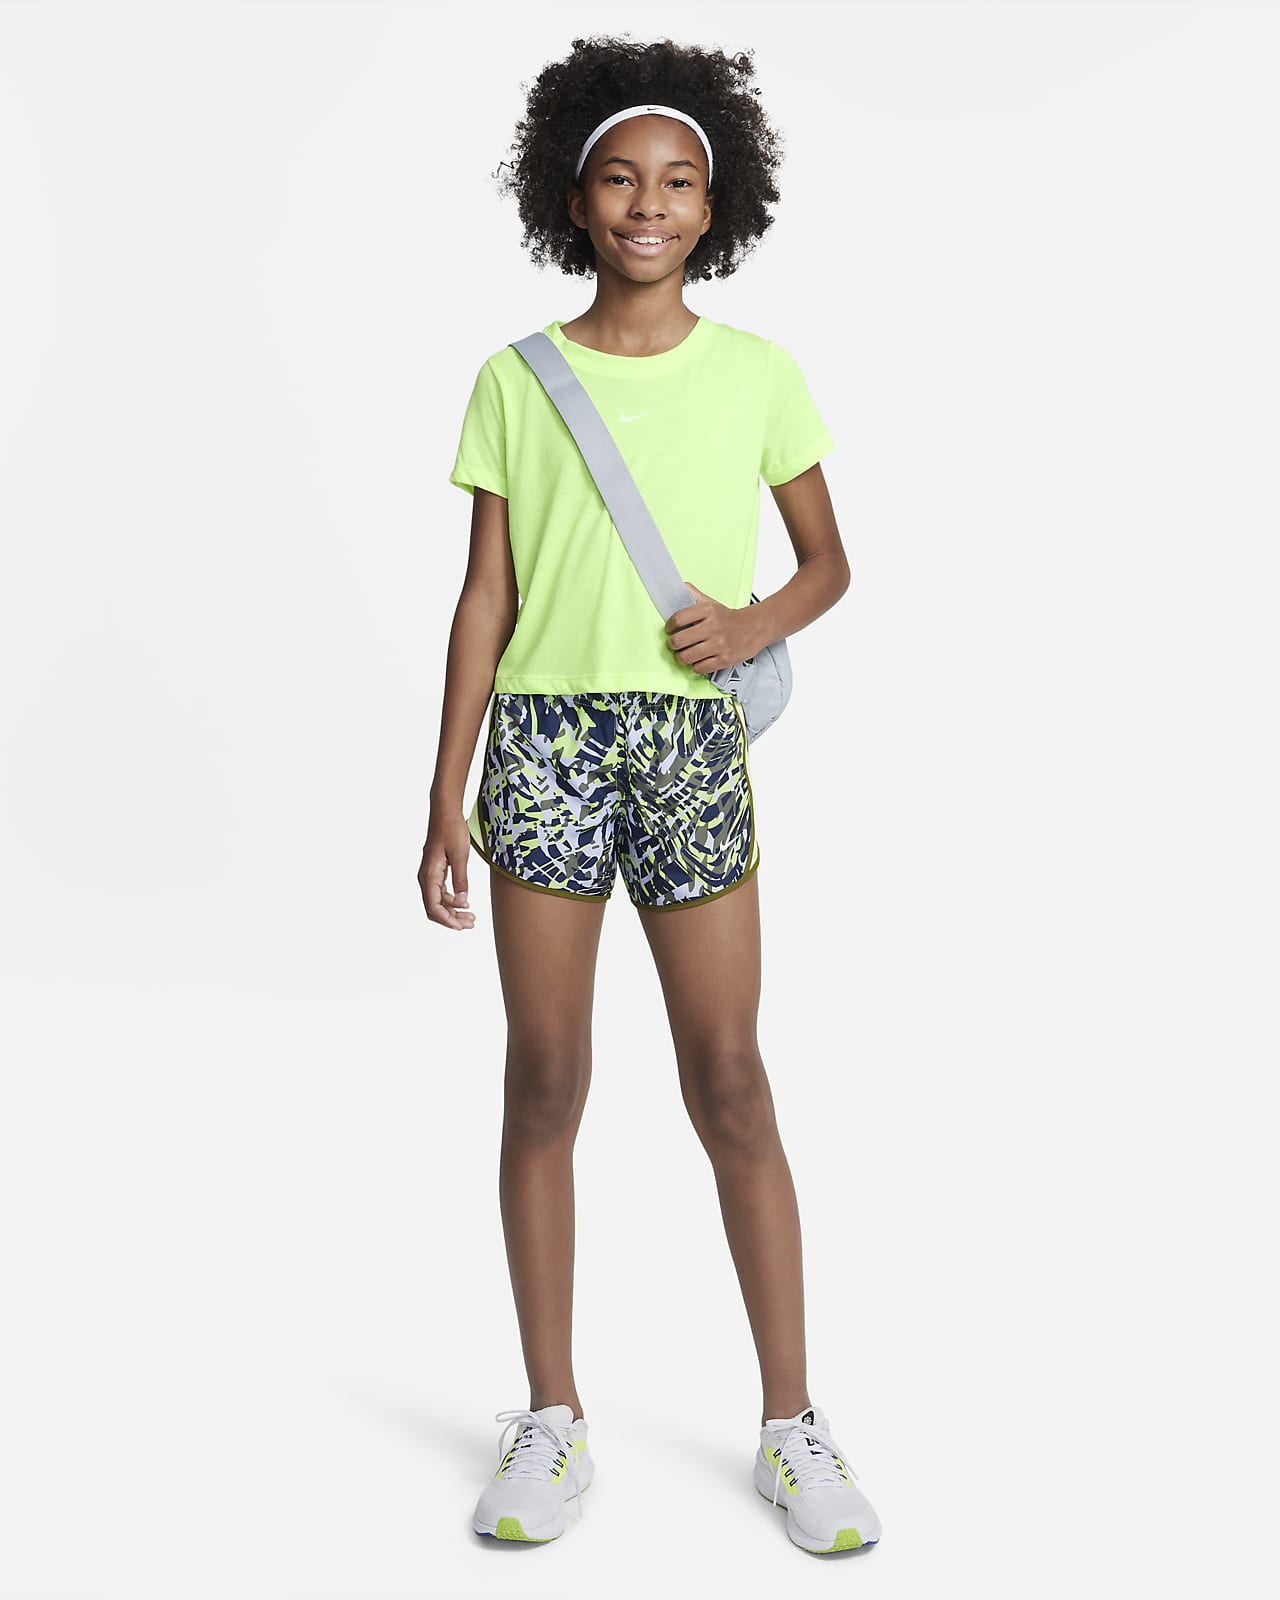 Nike Running Shorts Kids Girls Size 4 Years Black Pink Floral Dri Fit Shorts